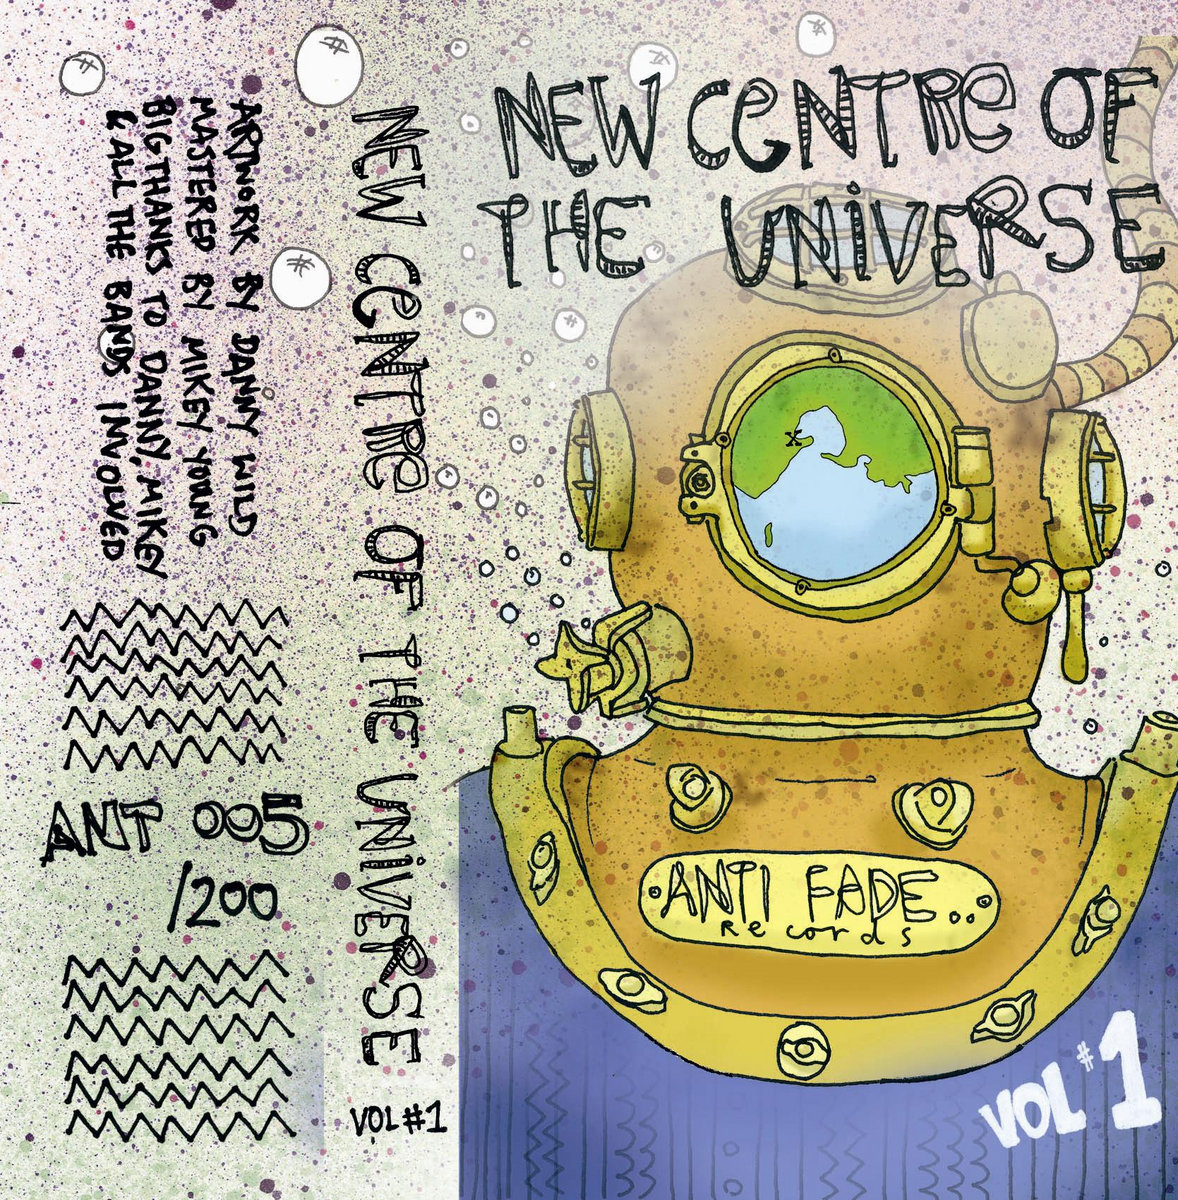 New Centre Of The Universe: Vol #1